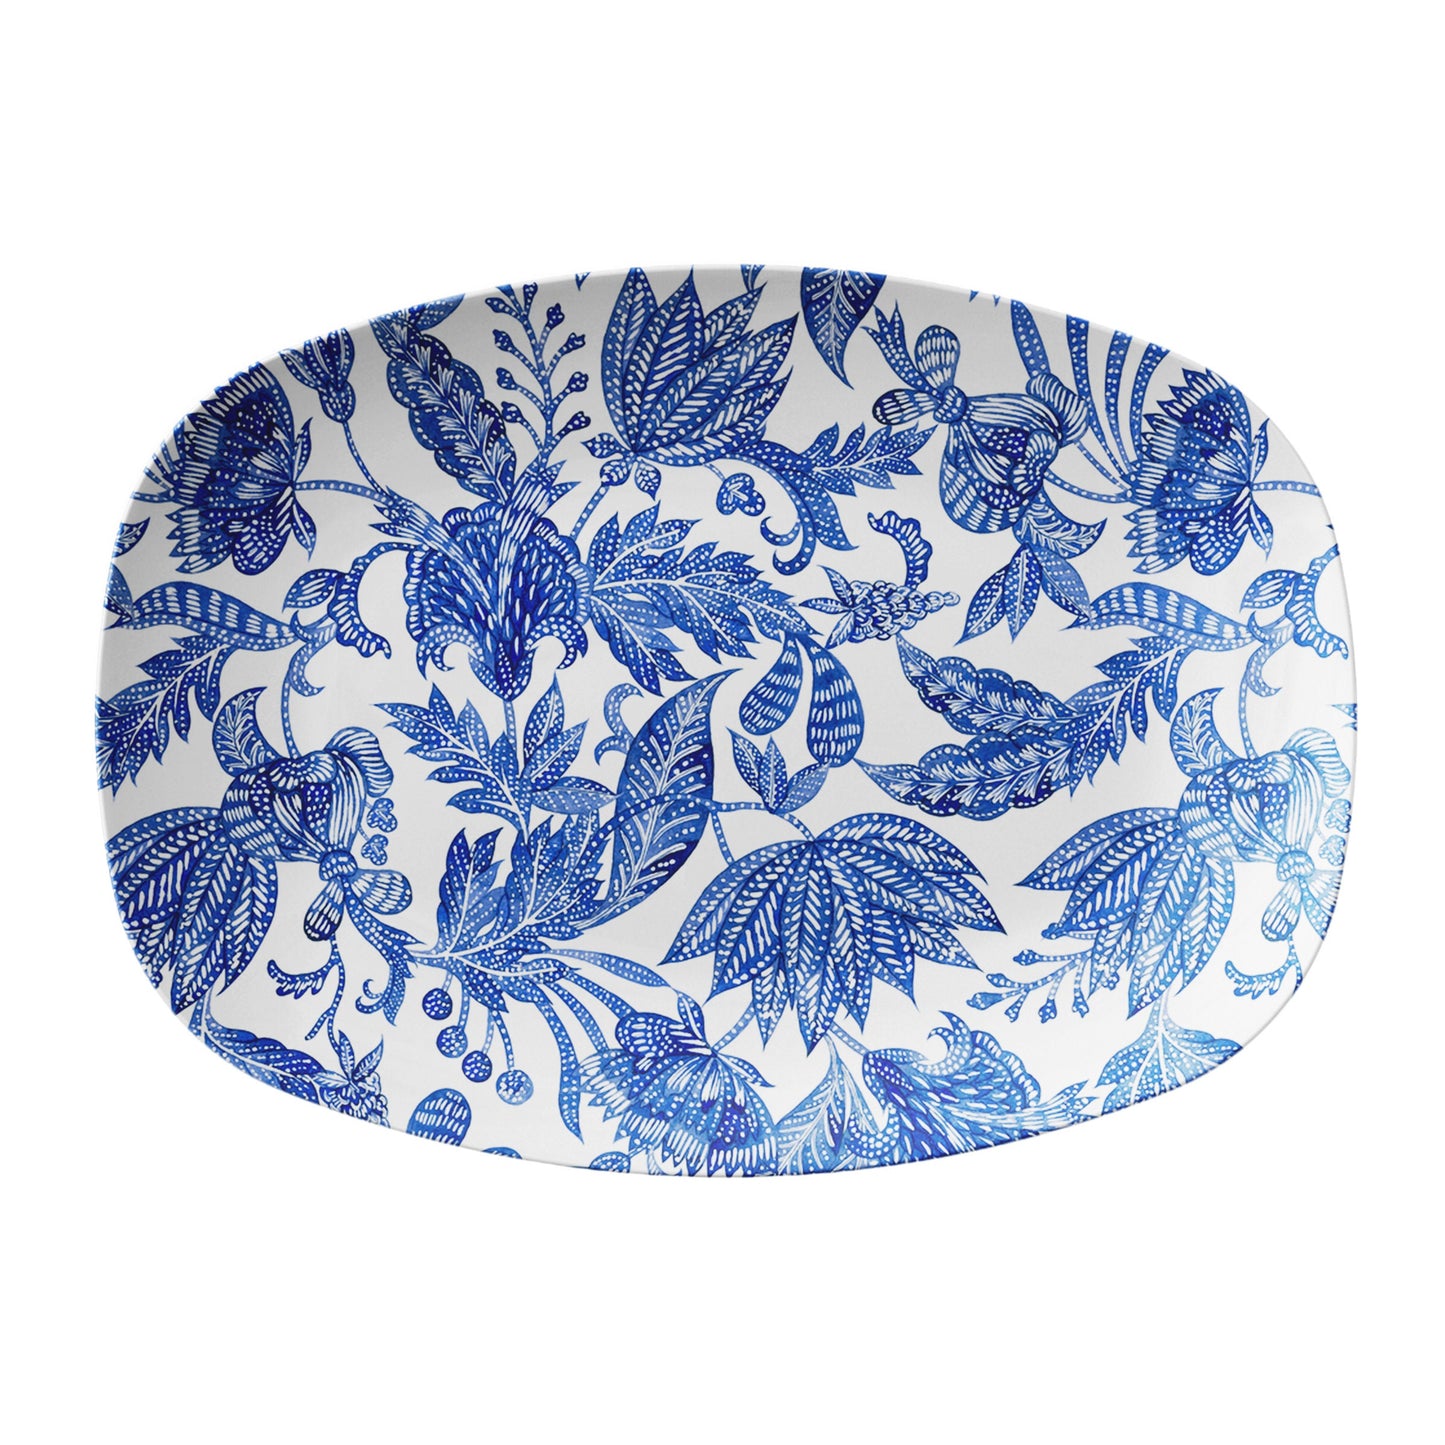 Floral Batik Serving Platter, Blue and White, Luxury Thermosaf Plastic